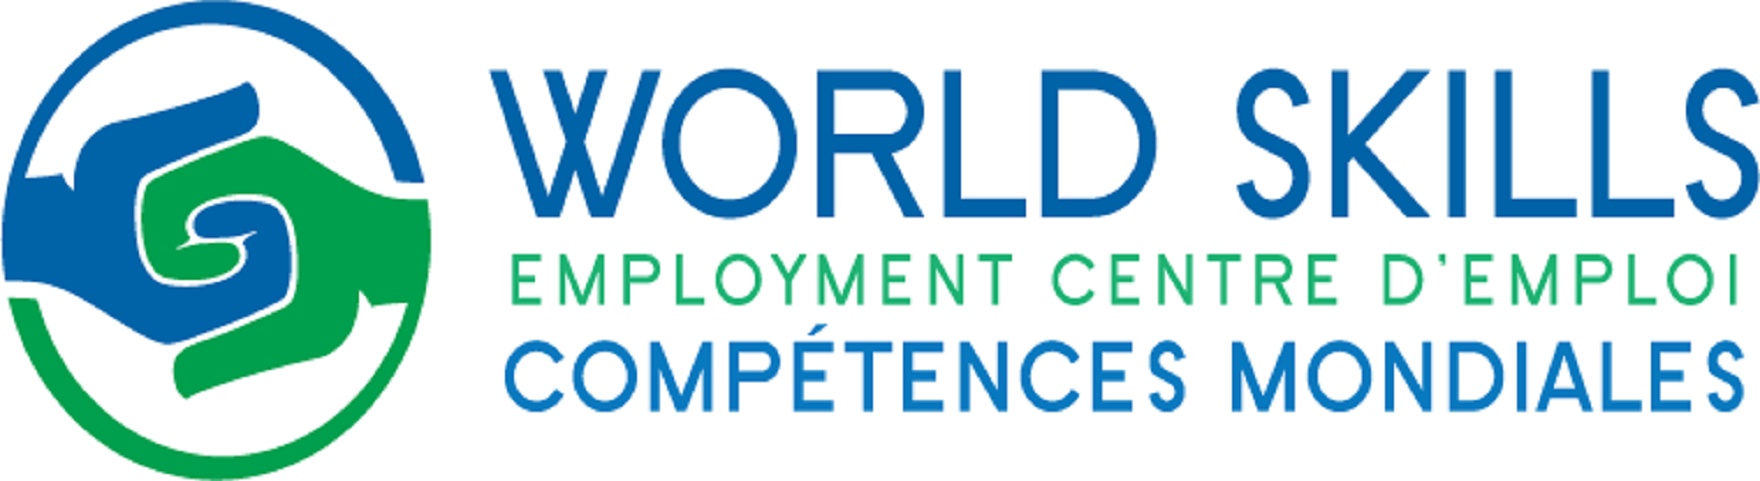 World-Skills-Logo_L.jpg